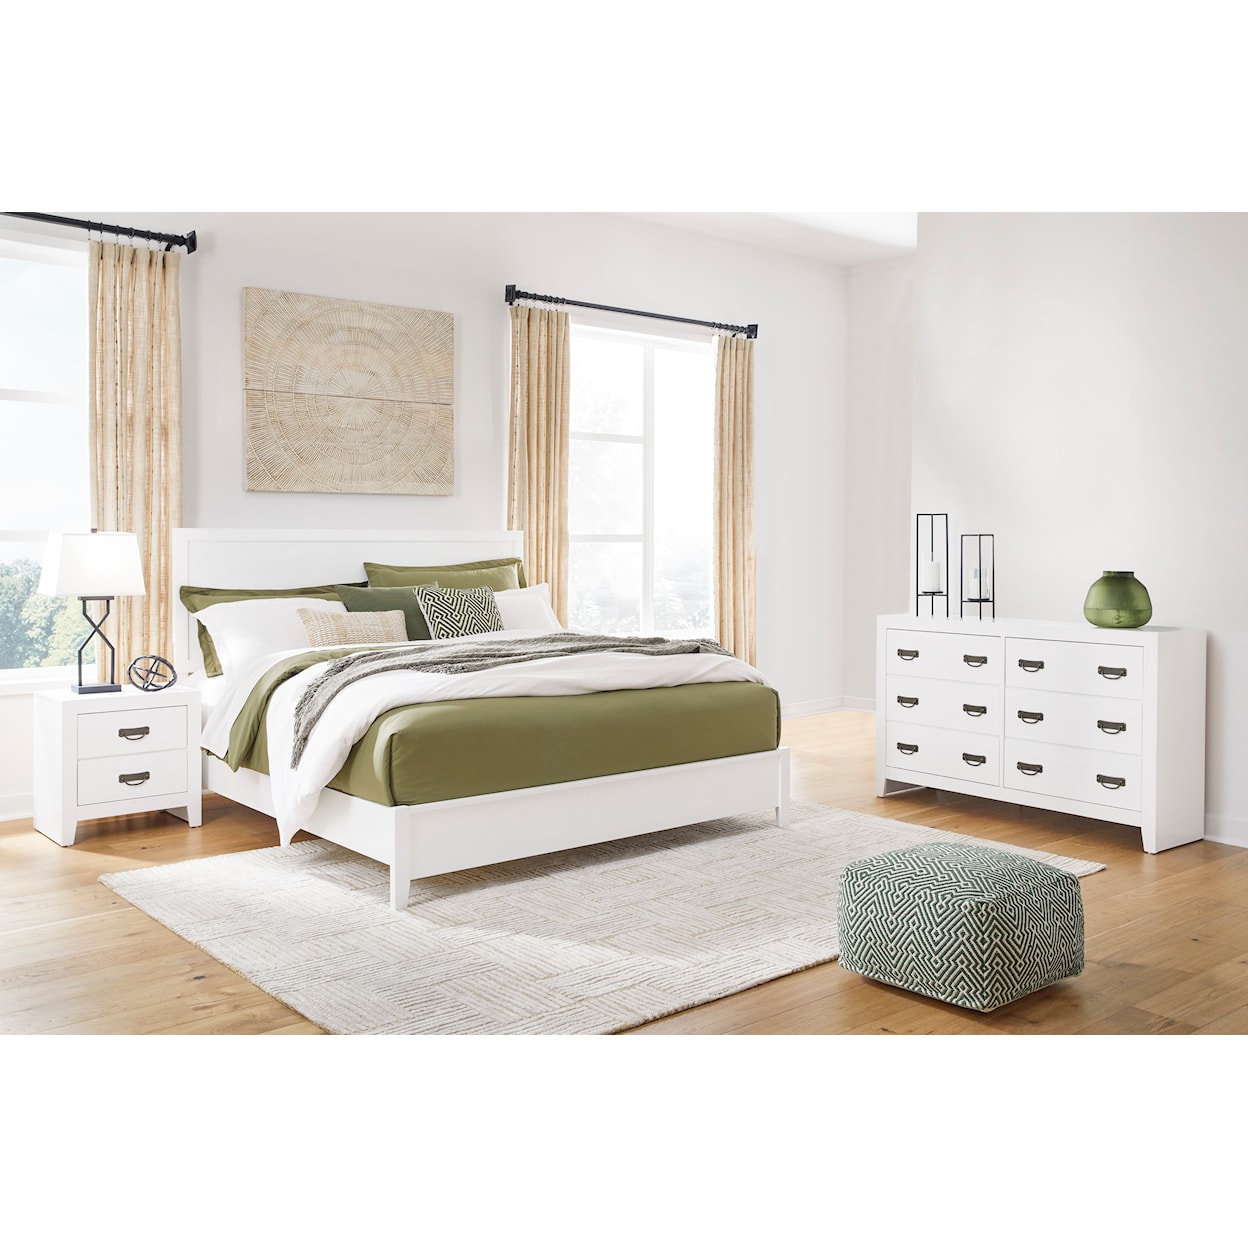 Ashley Furniture Signature Design Binterglen King Bedroom Set